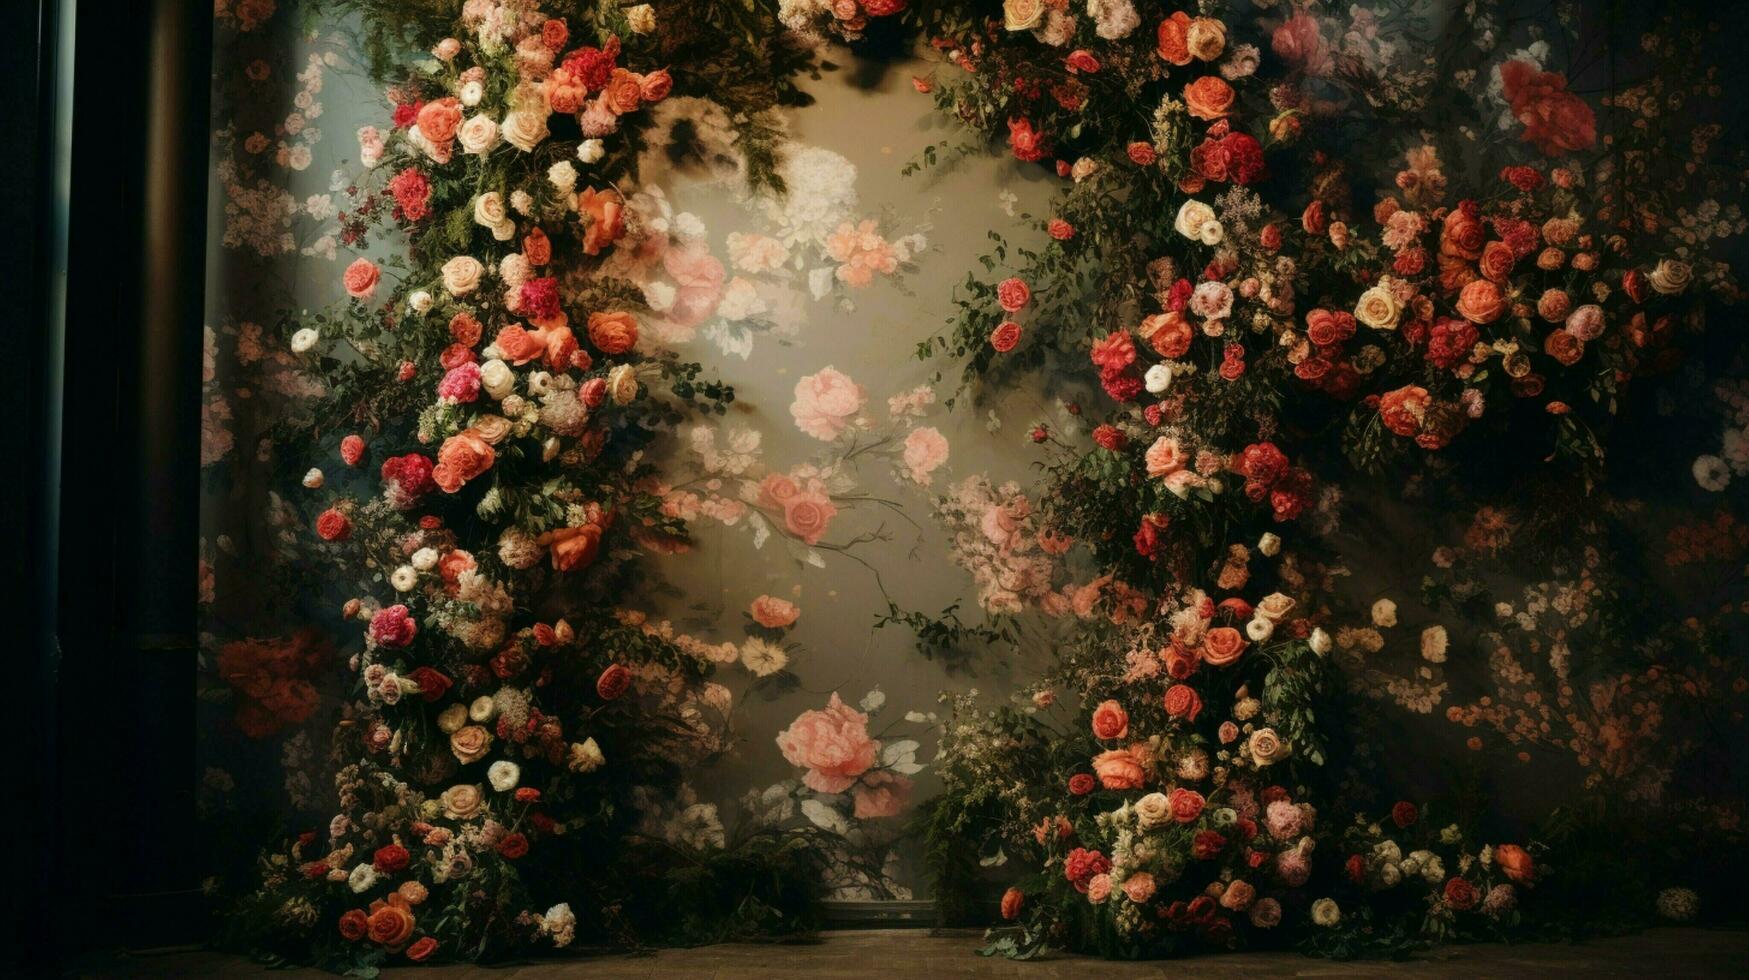 floral patterns depict a modern wedding celebration photo